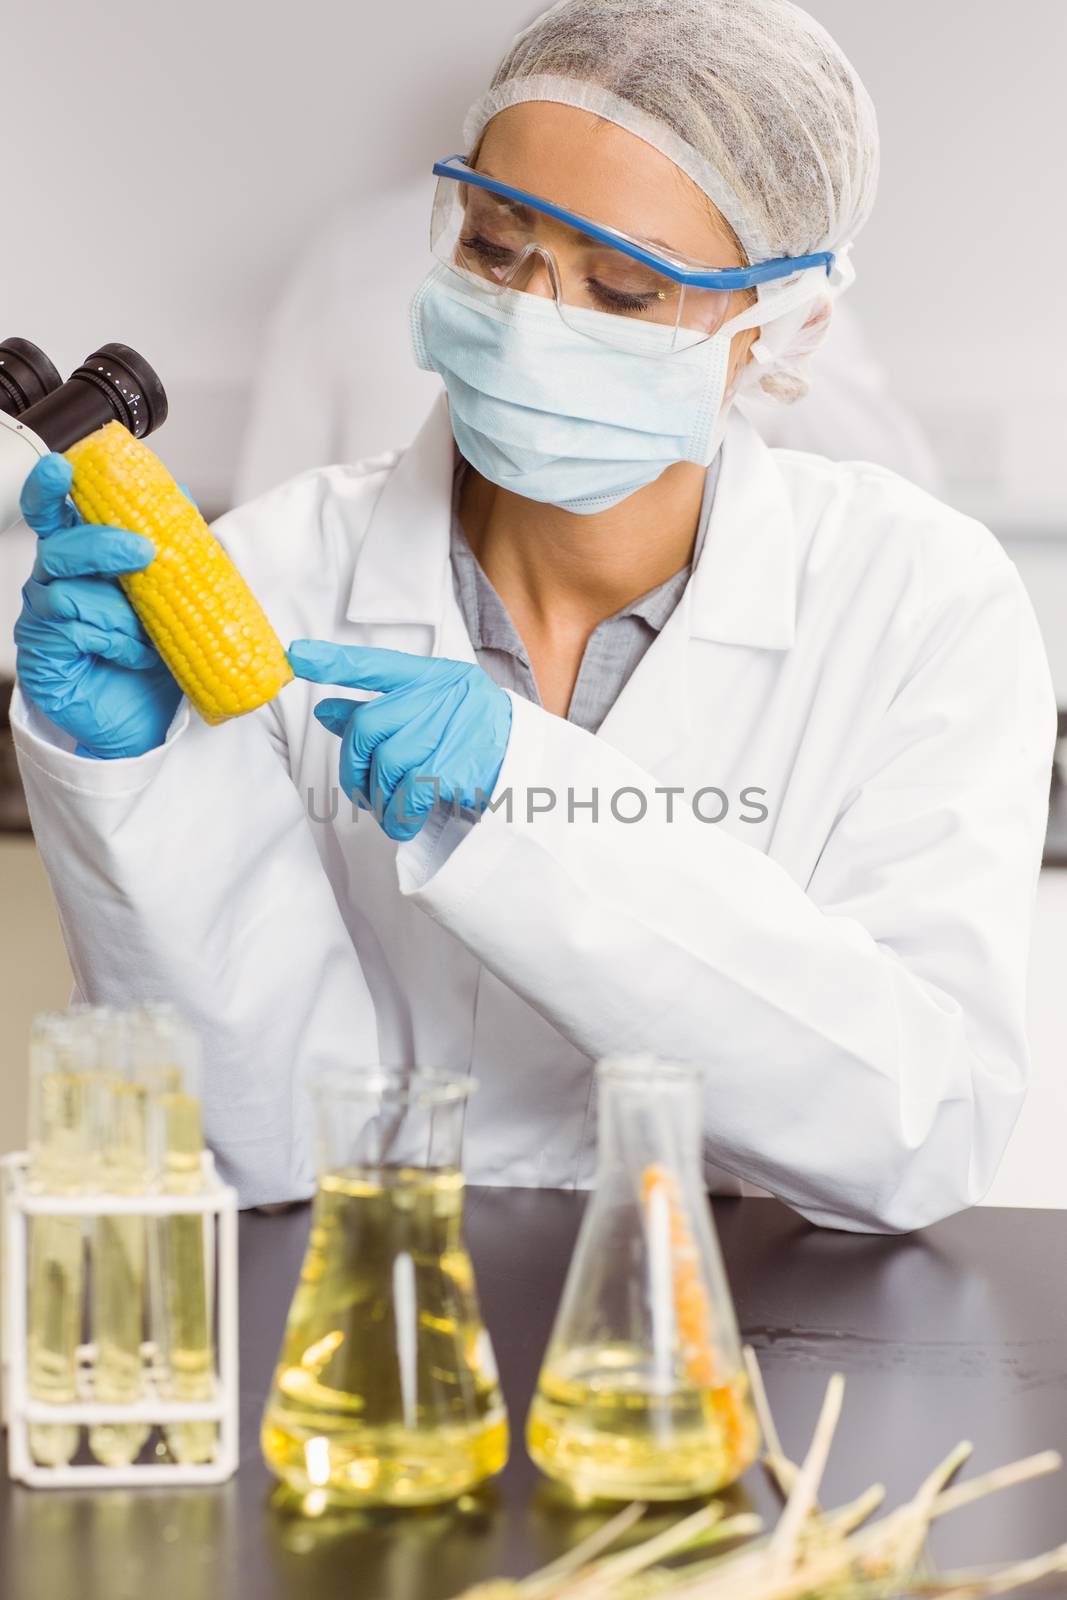 Food scientist looking at corn cob at the university